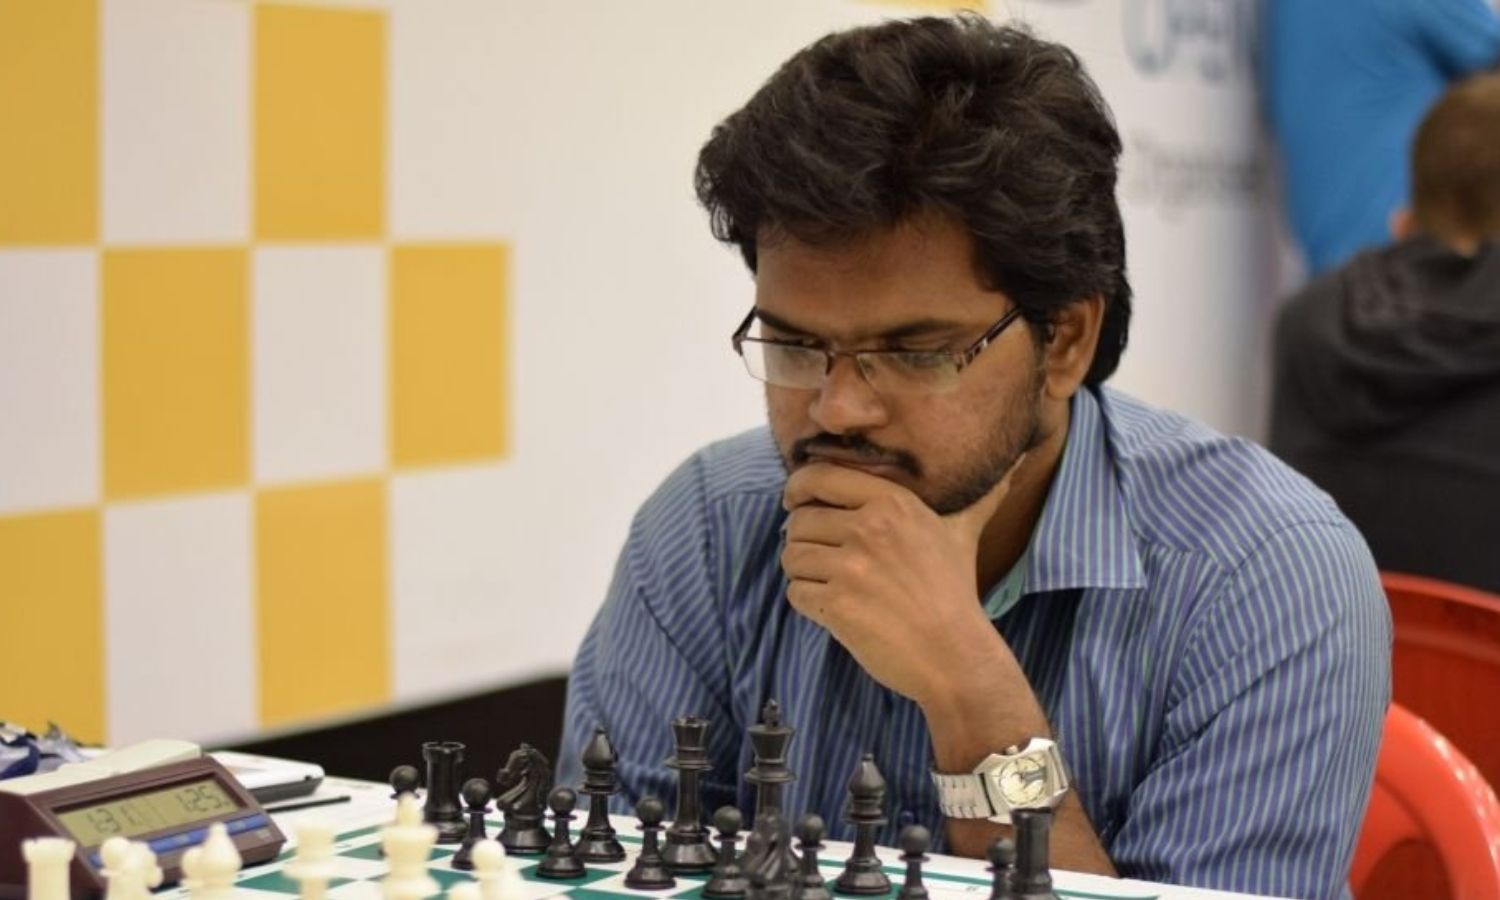 P. Shyam Nikhil becomes India's 85th Chess Grandmaster